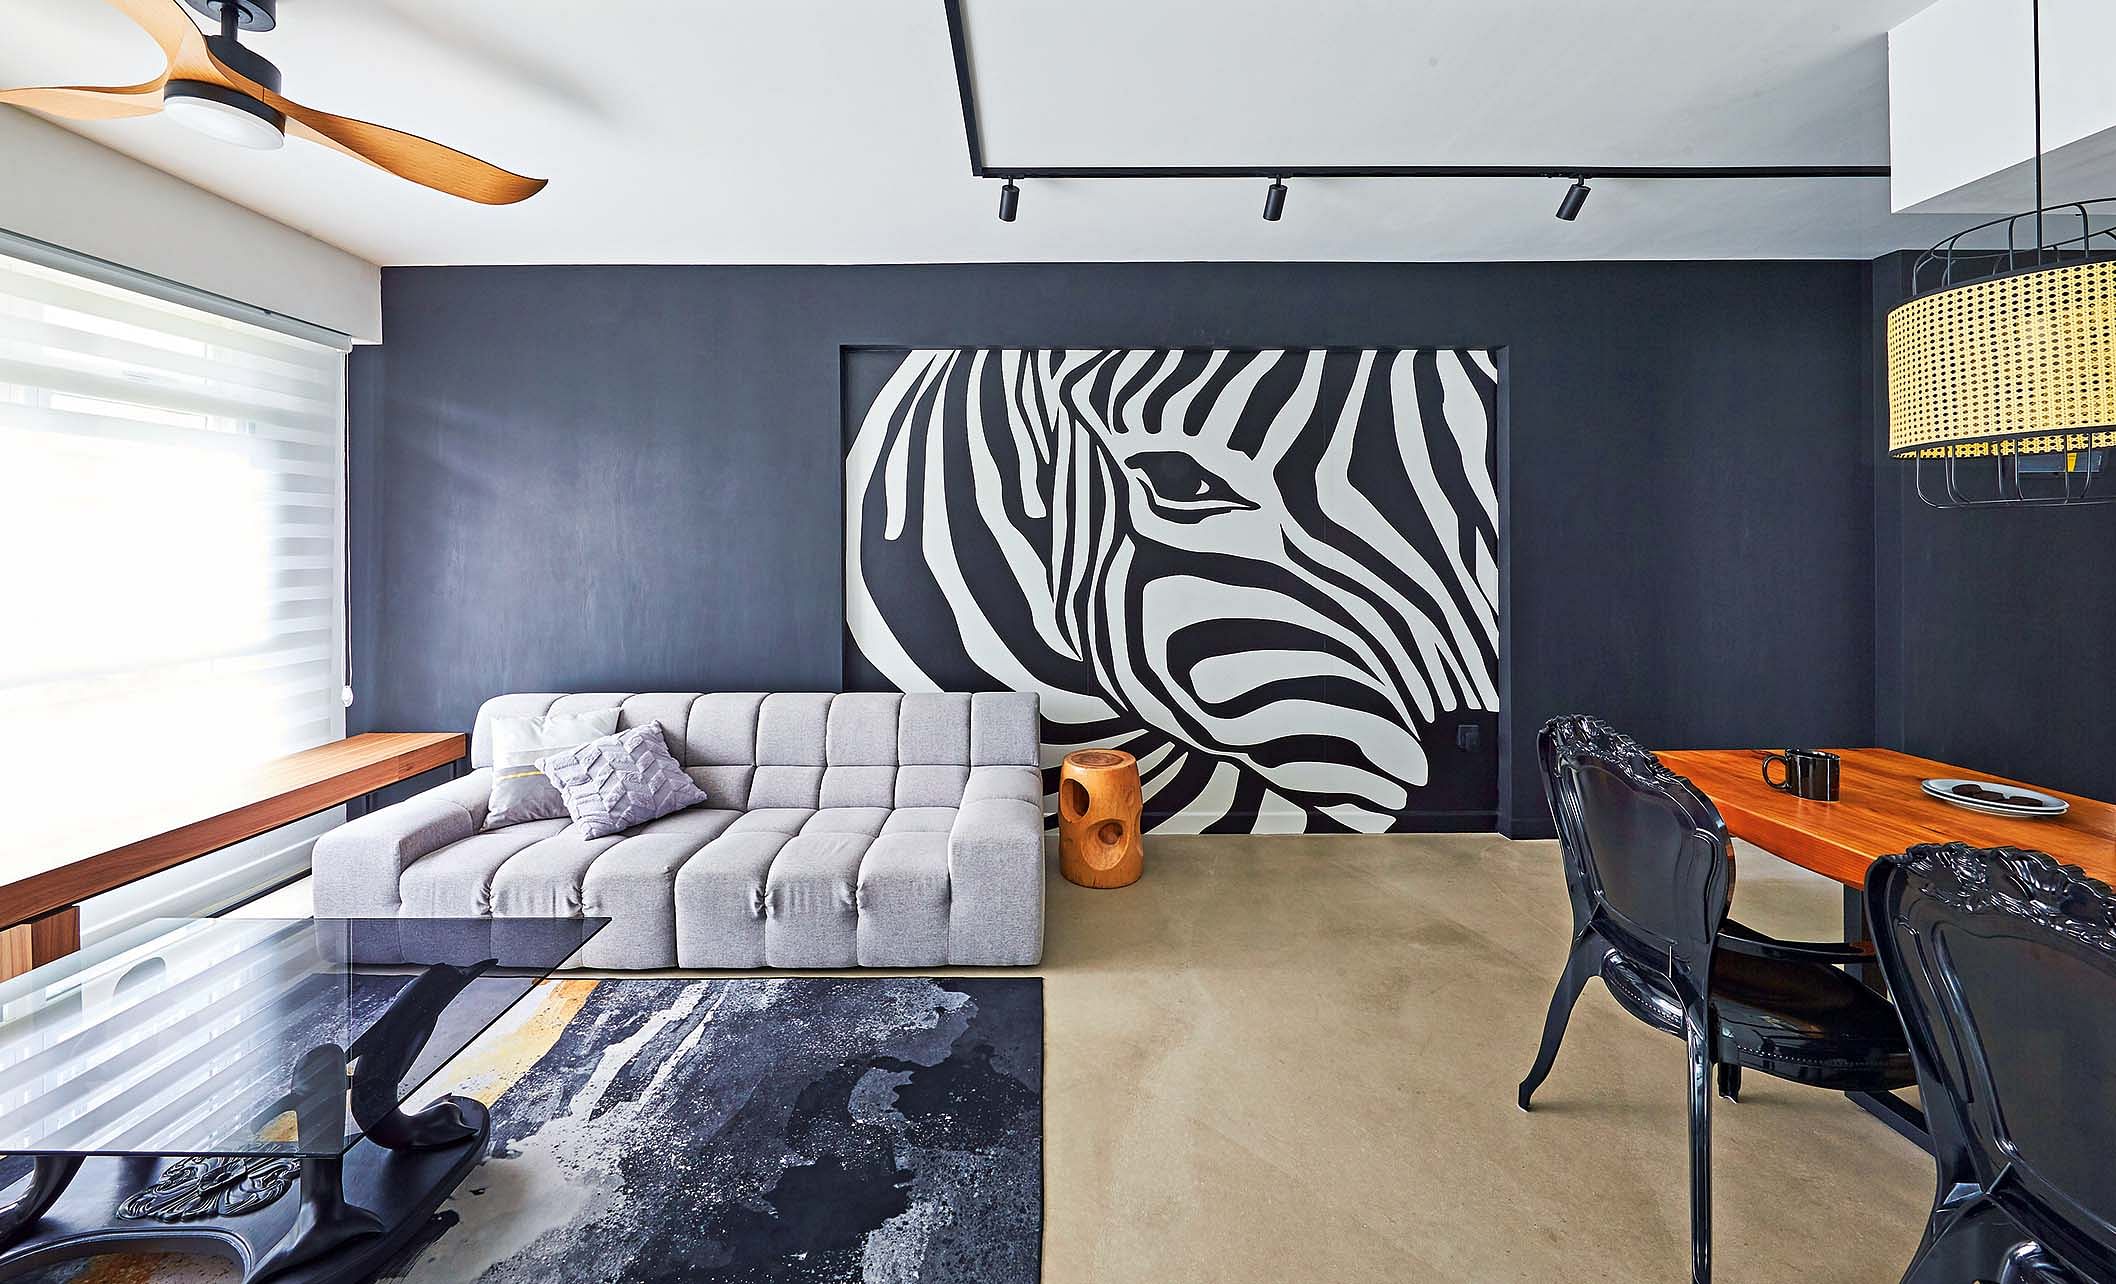 House Tour: 3-Room BTO in Punggol with $80,000 Zebra Prints, Black & White Renovation